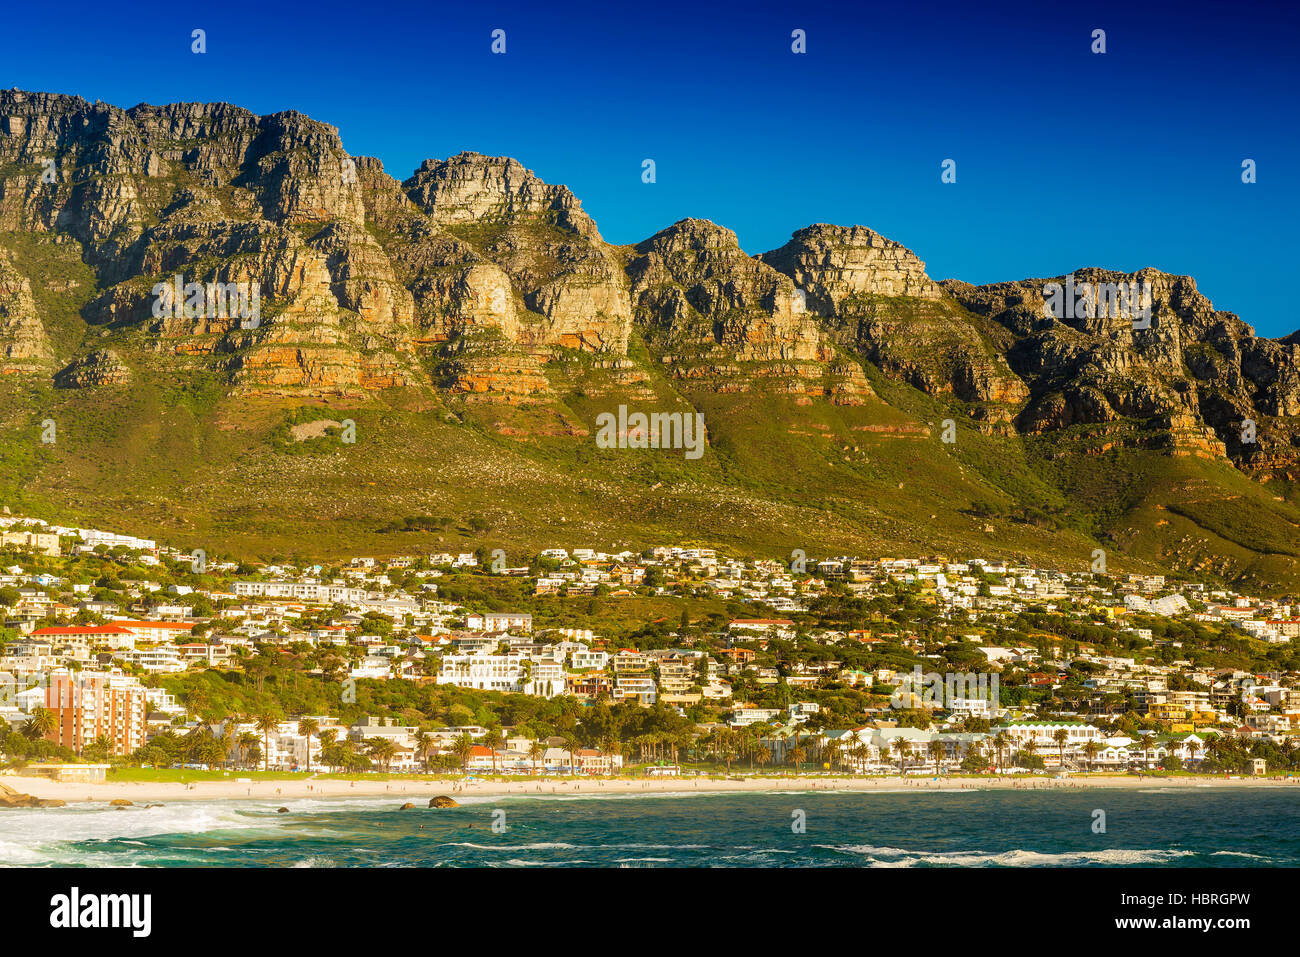 Die zwölf Apostel in Kapstadt, Südafrika Stockfoto